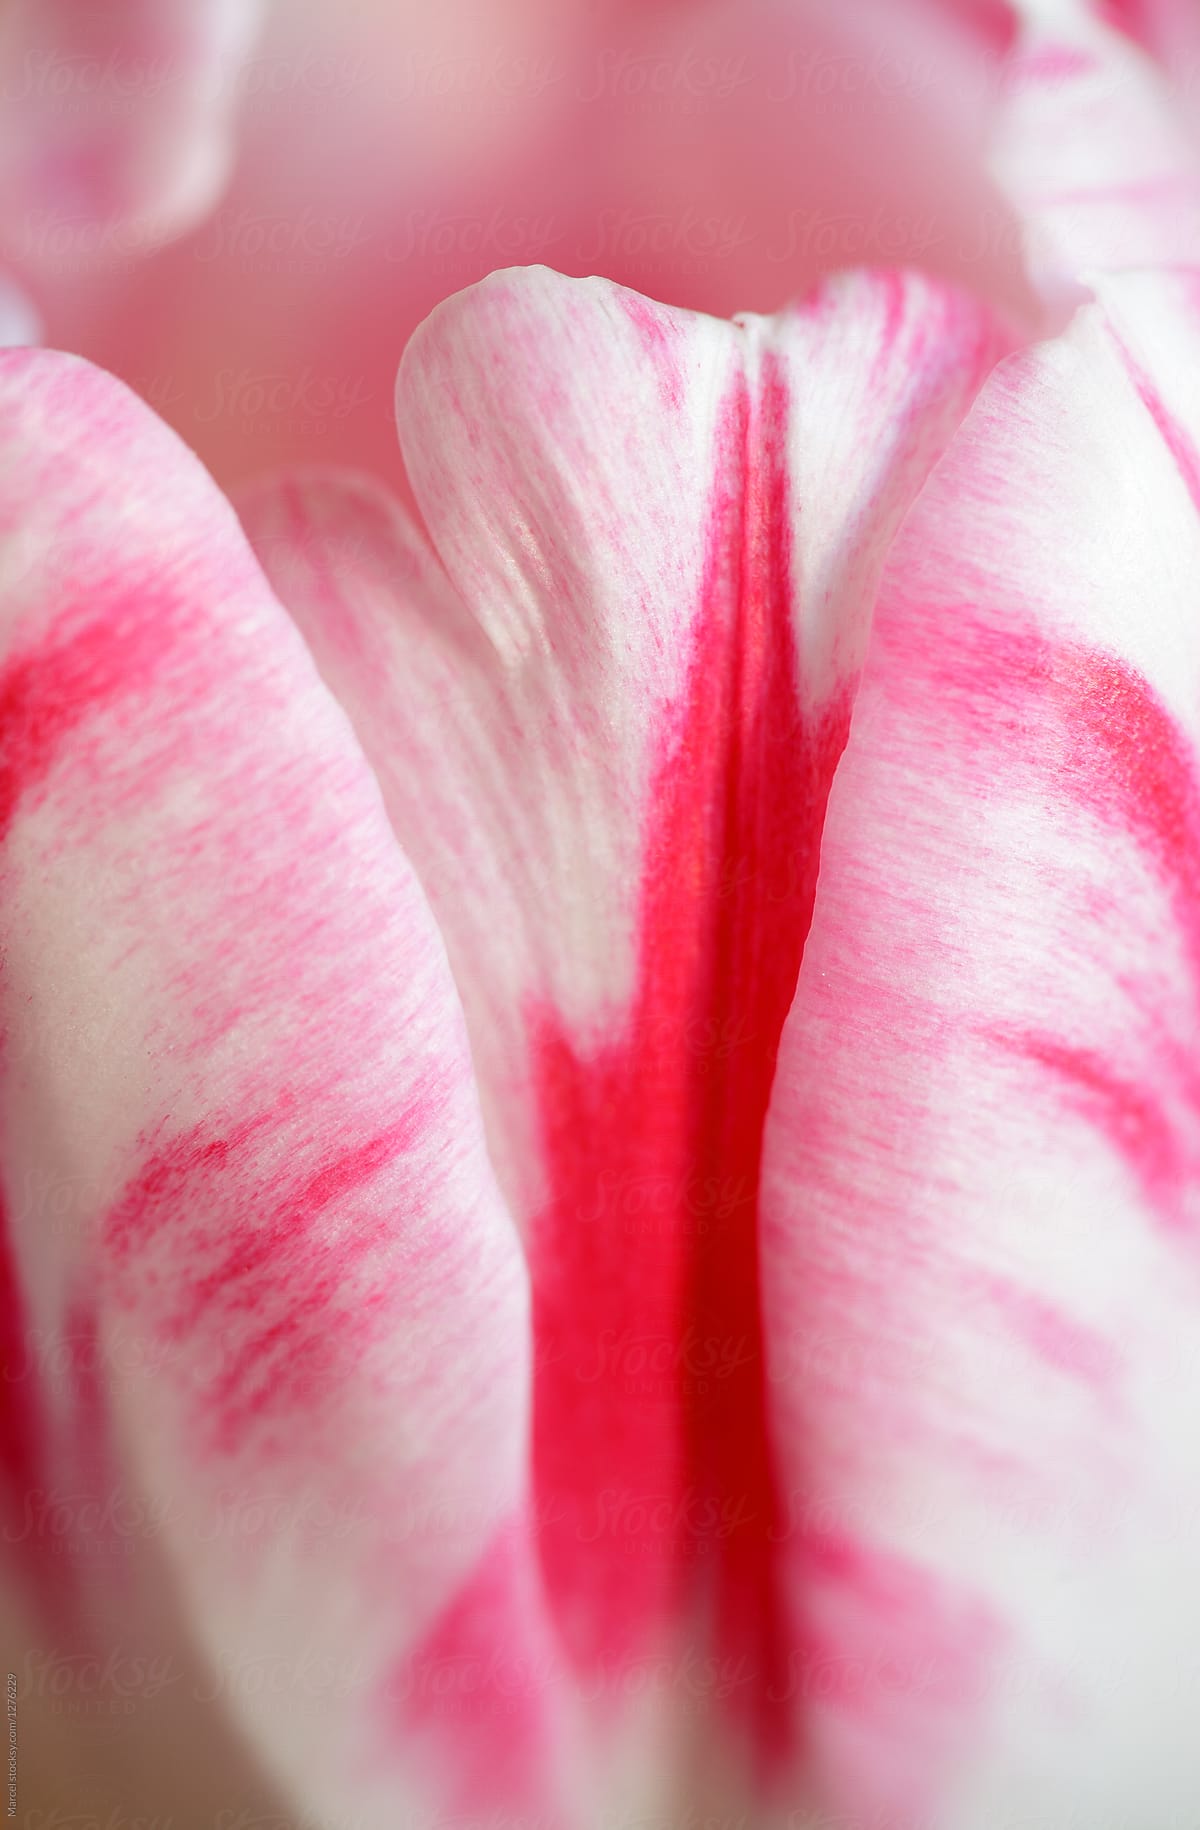 Tulip macro